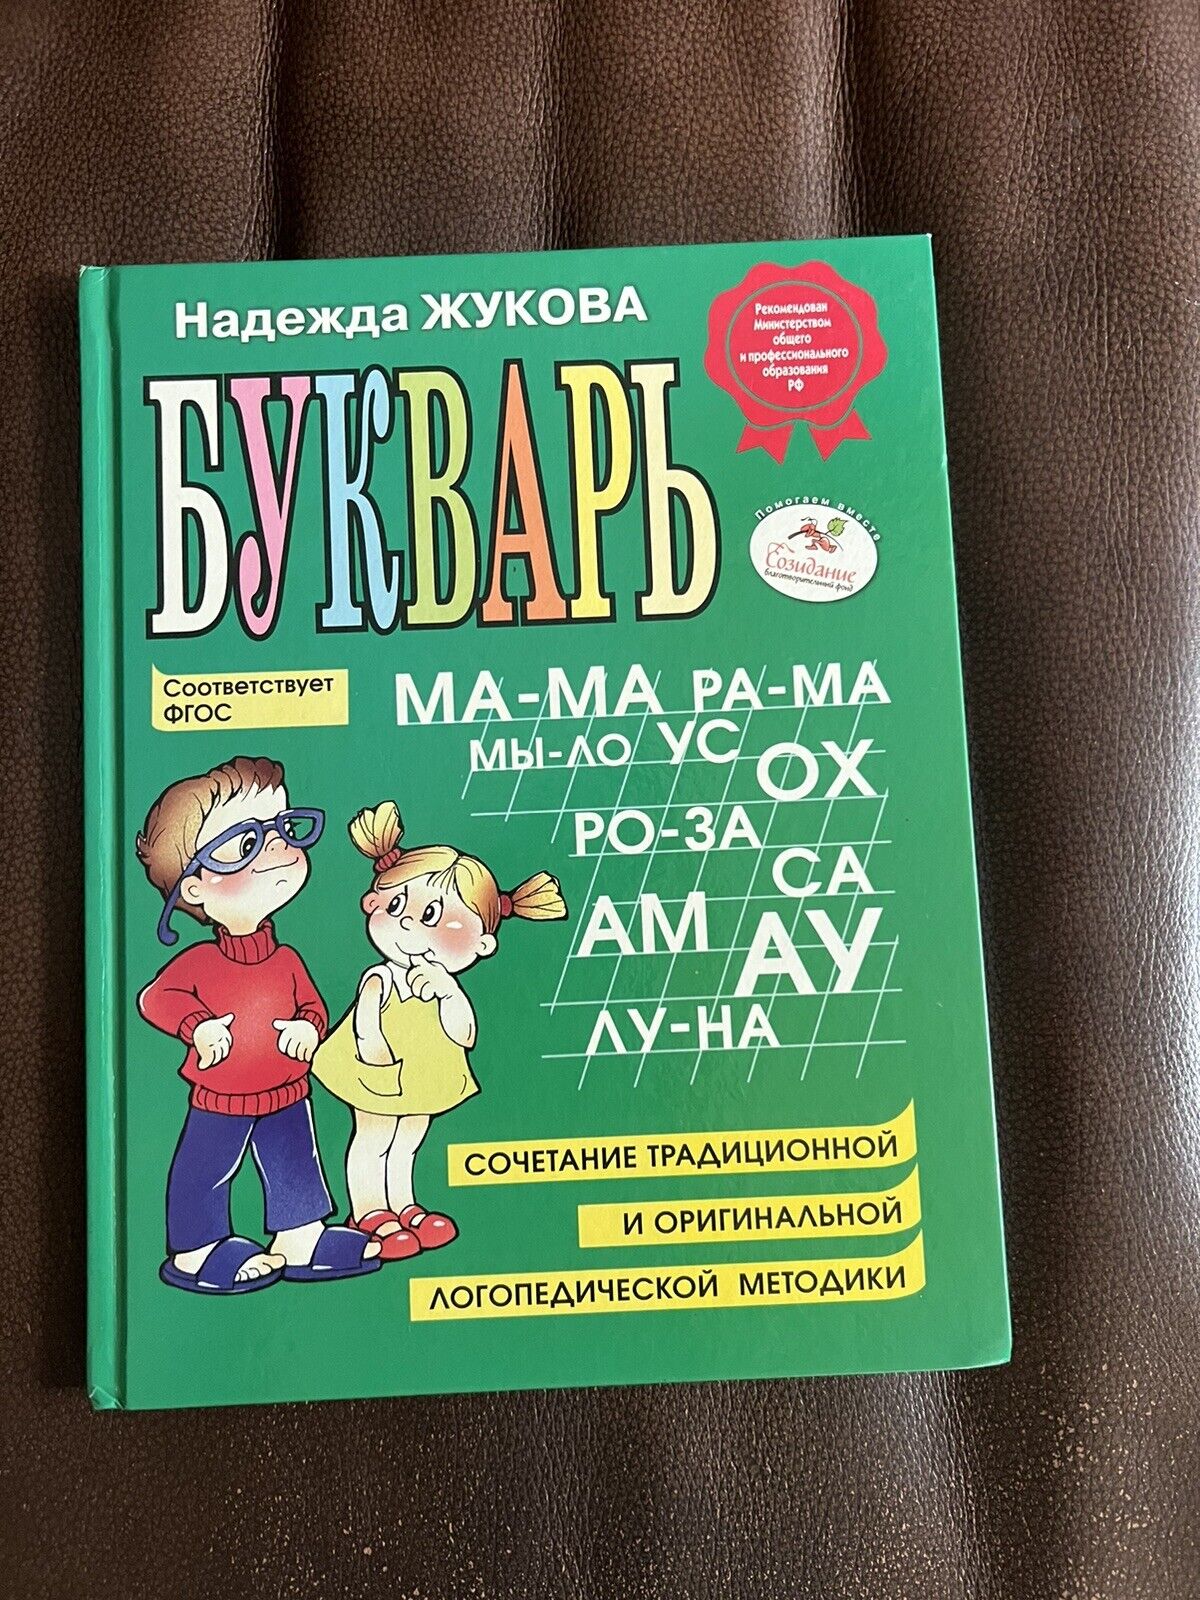 2001 BUKVAR\' Russian Language ILLUSTRATED ABC Primer SCHOOL & PRESCHOOL Textbook